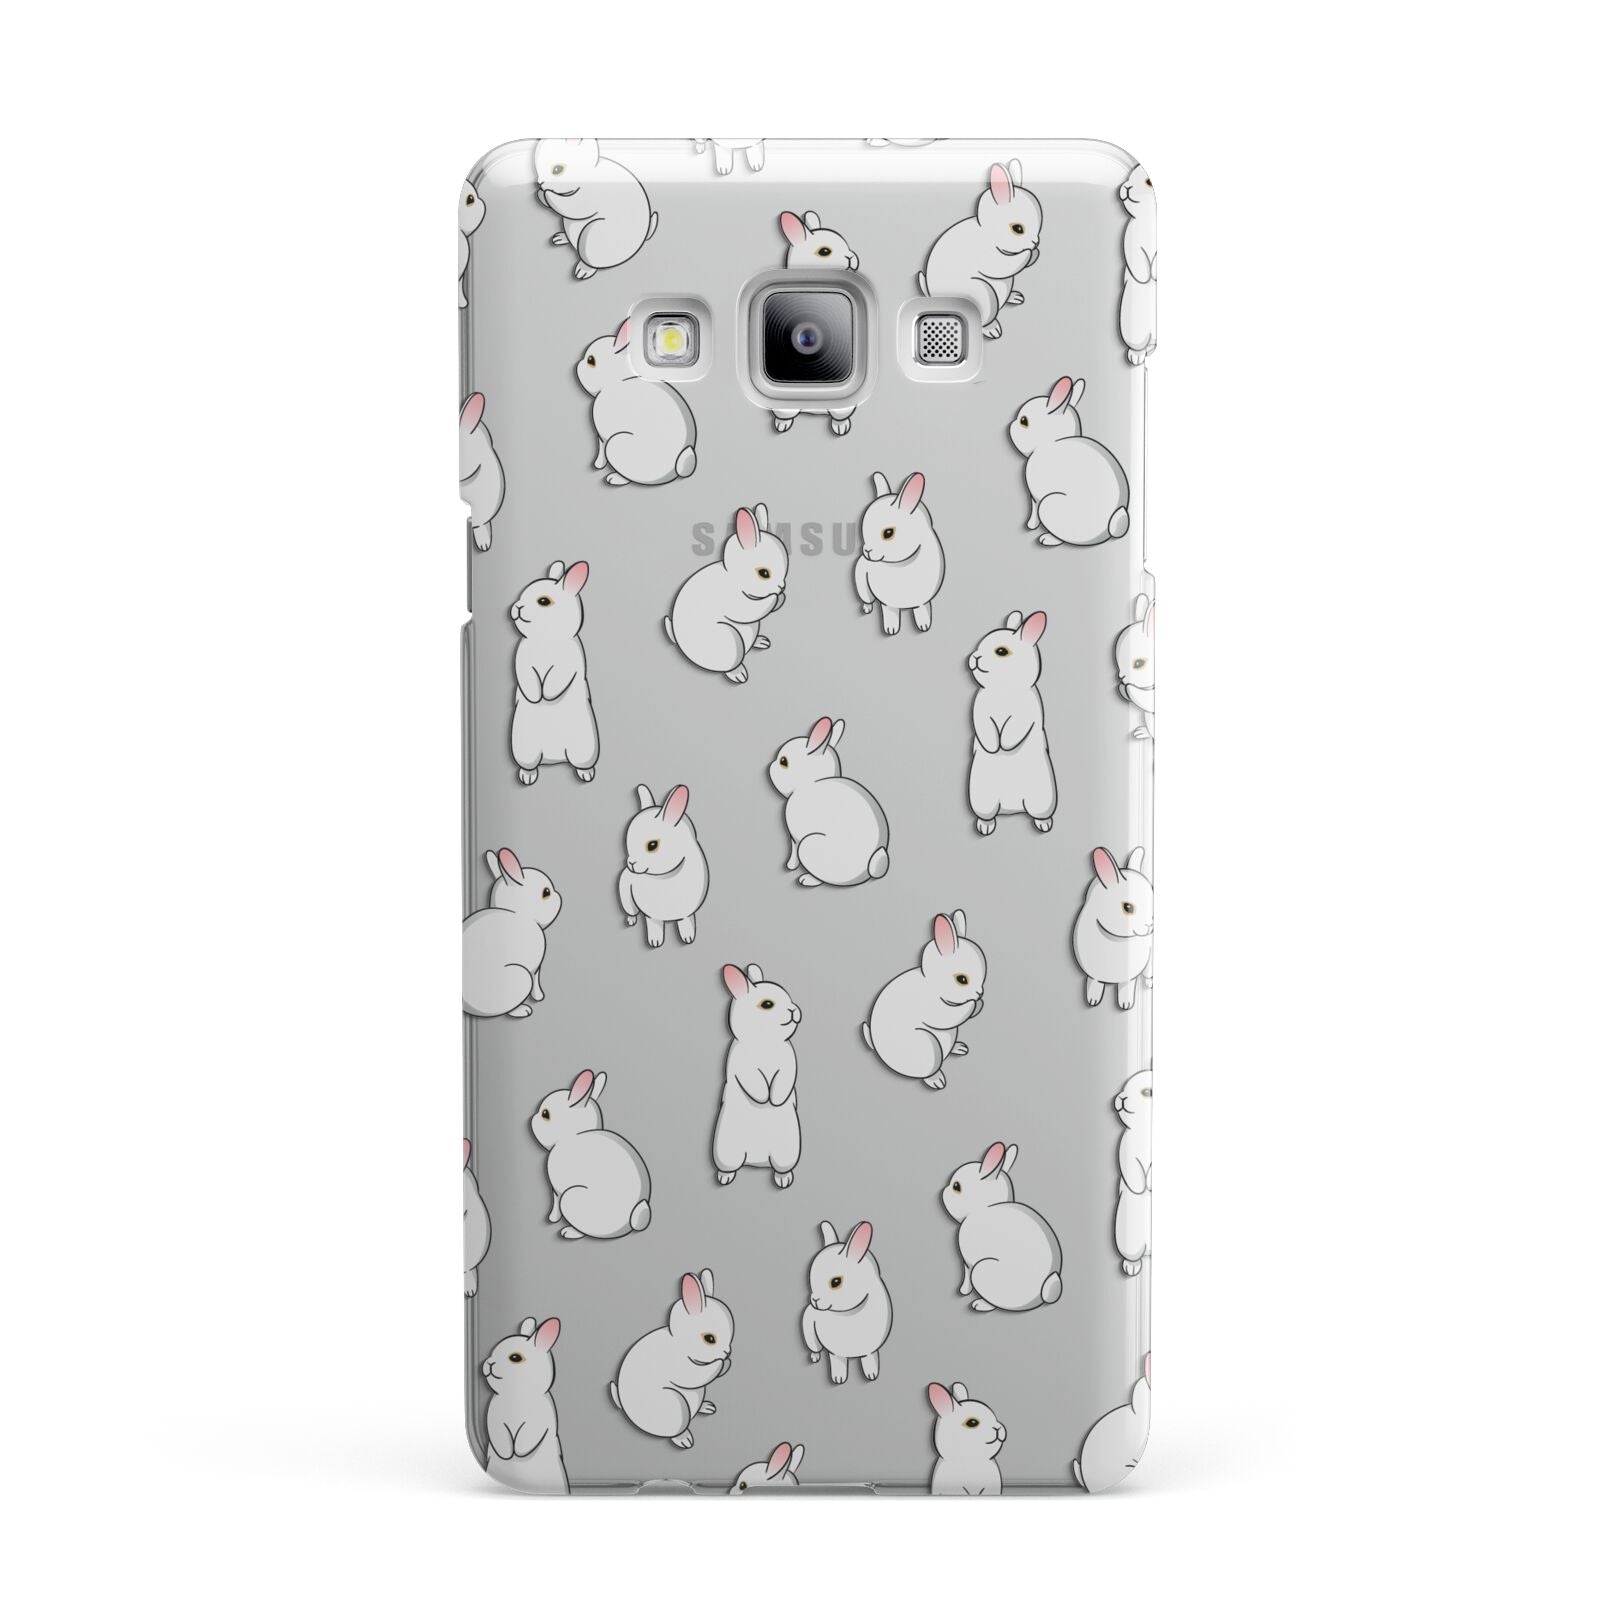 Bunny Rabbit Samsung Galaxy A7 2015 Case